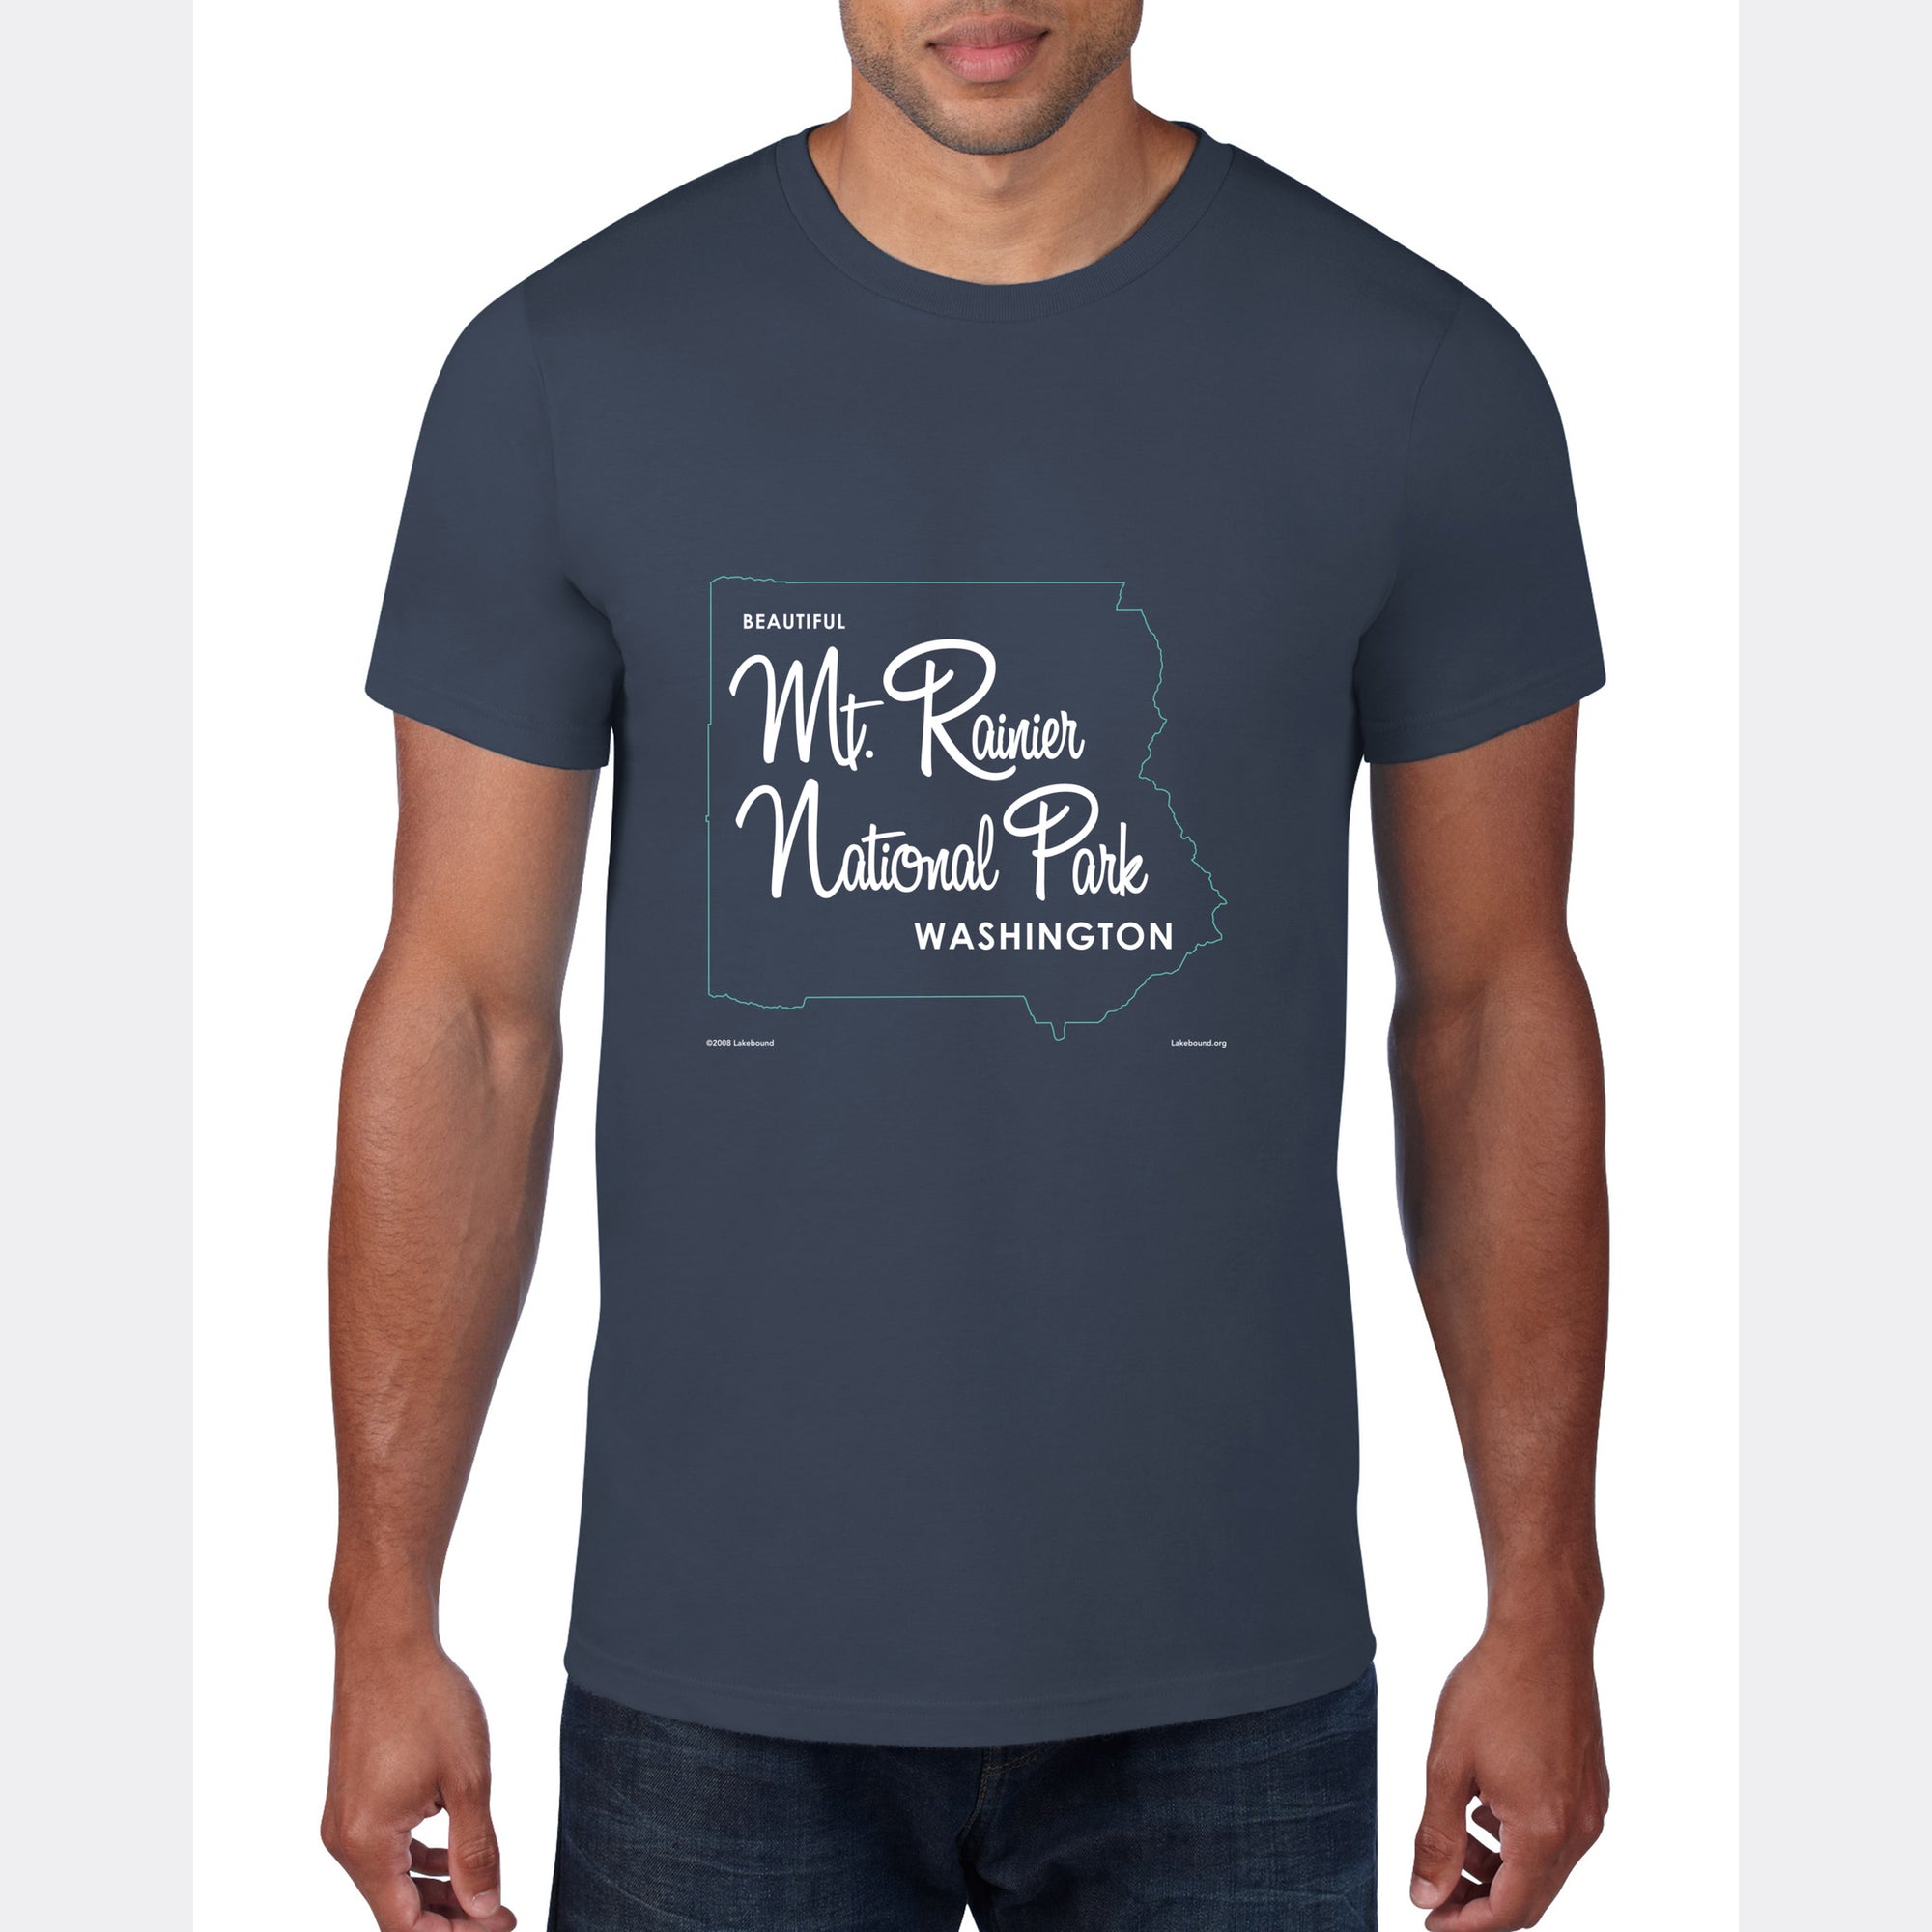 Mt. Rainier Washington, T-Shirt